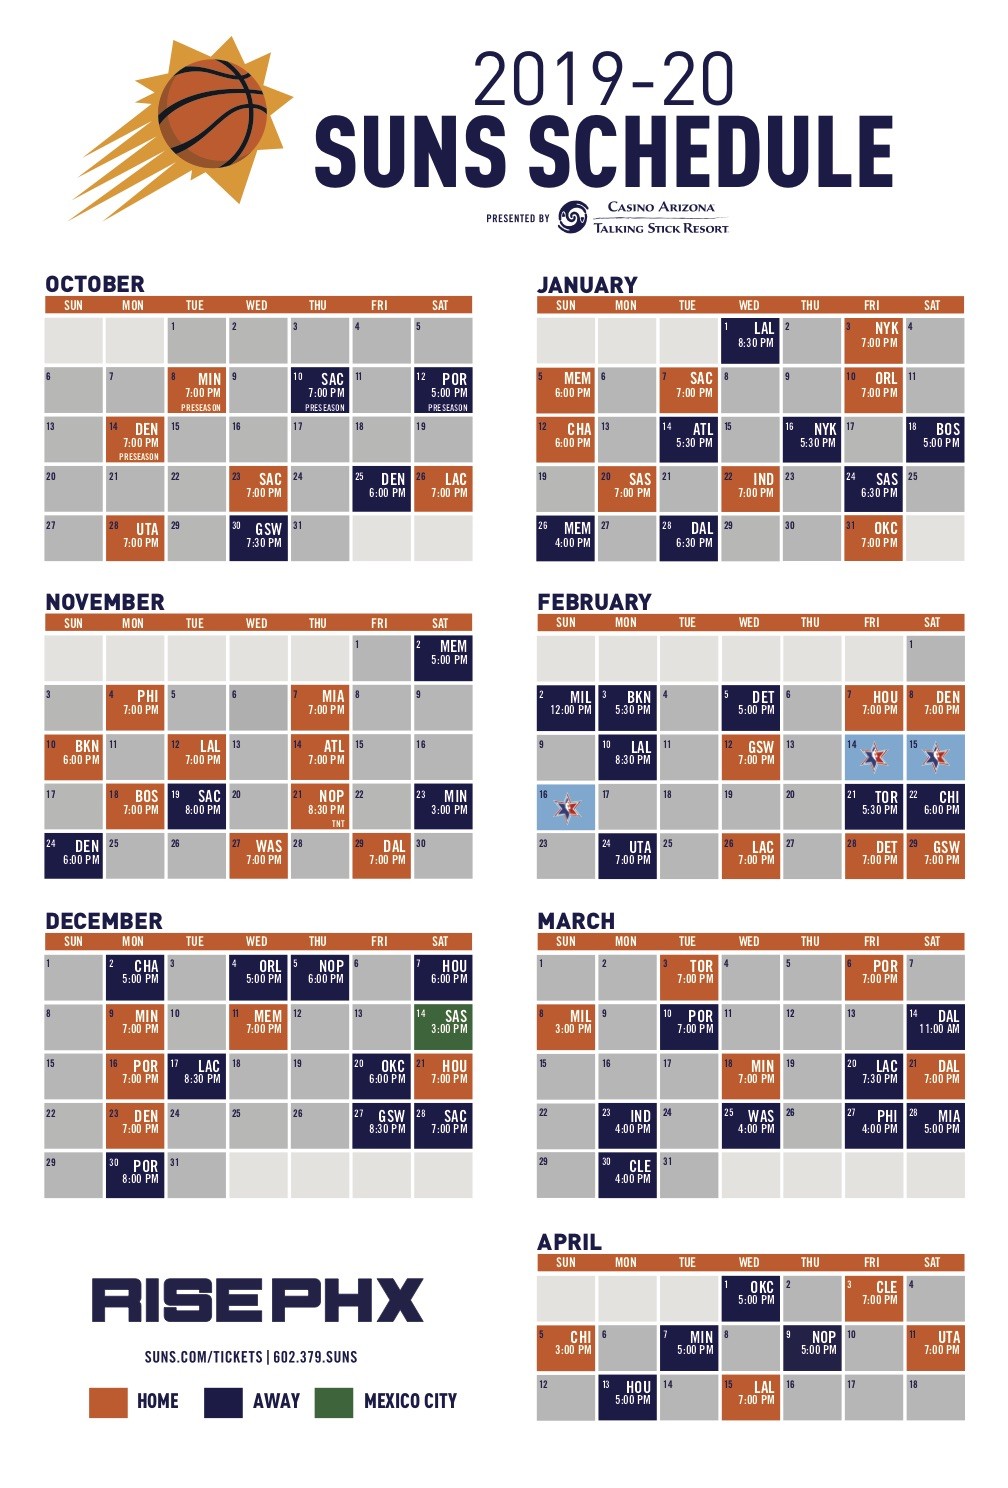 Phoenix Suns Announce 201920 NBA Season Schedule